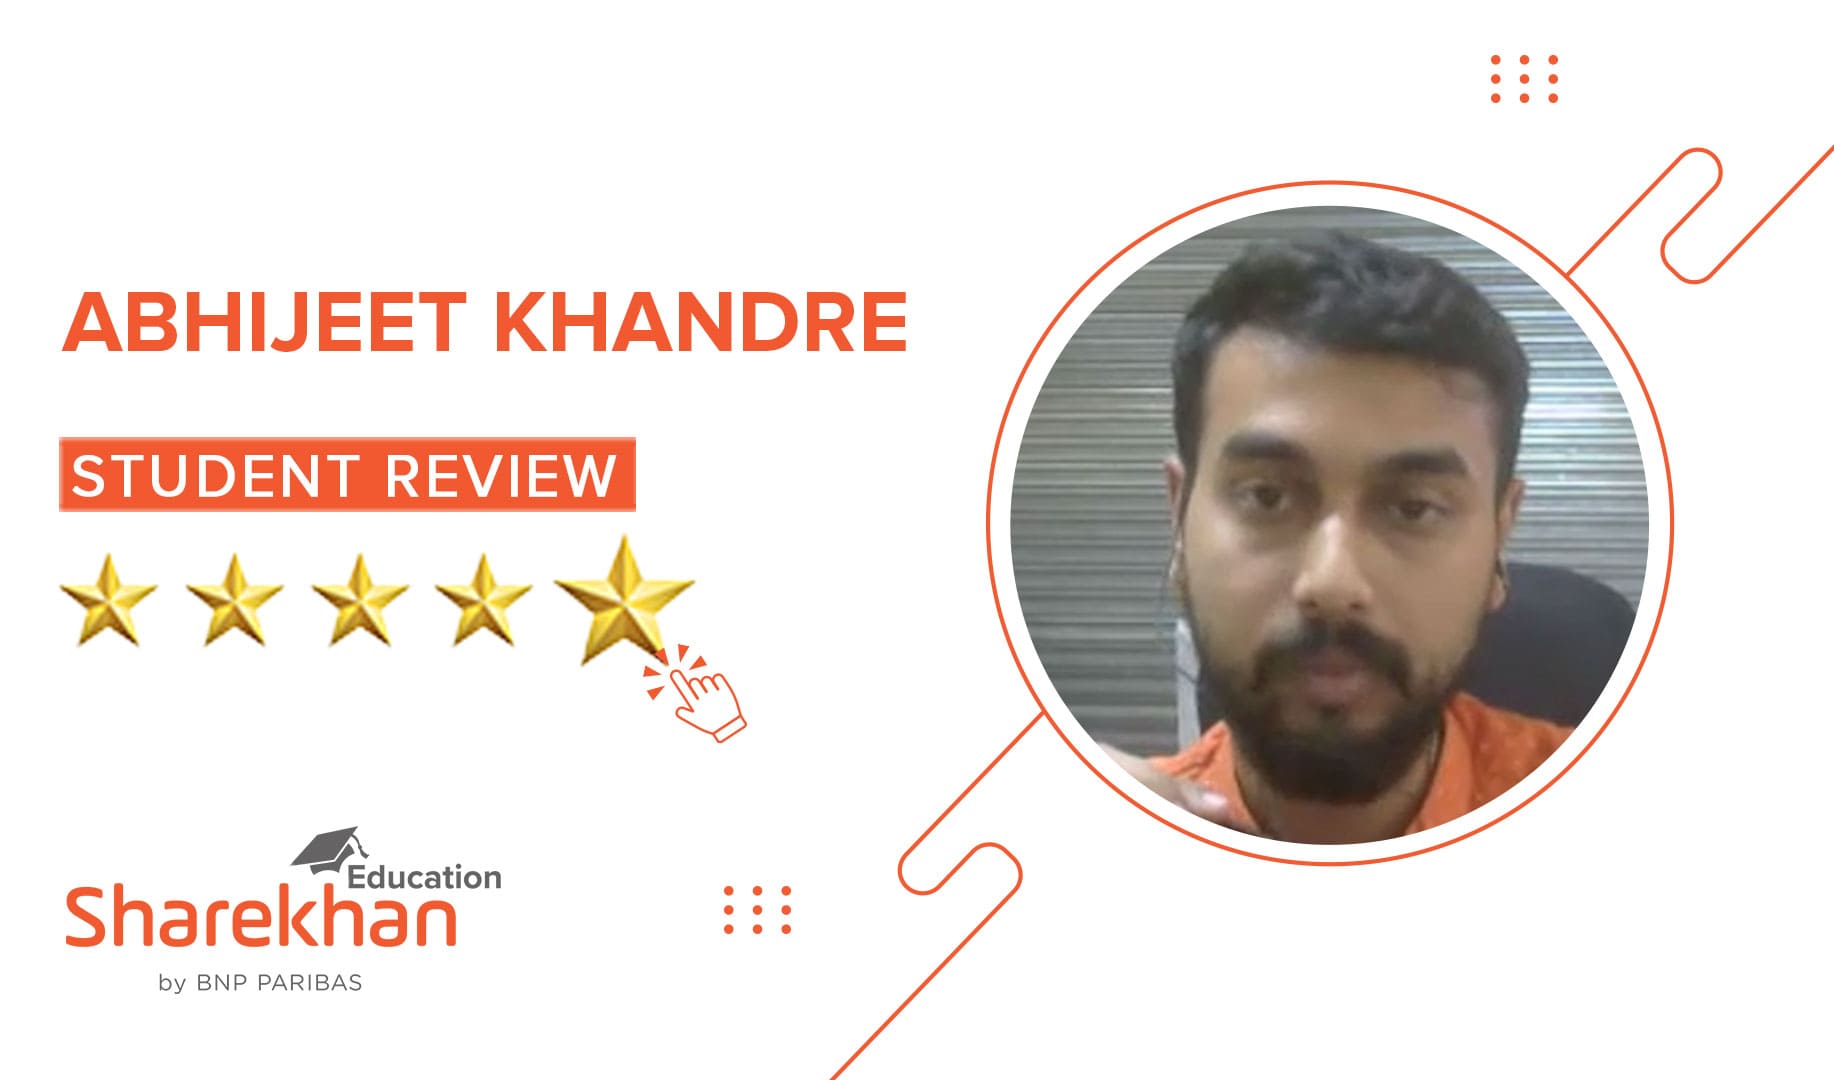 Sharekhan Education Review by Abhijeet Khandre